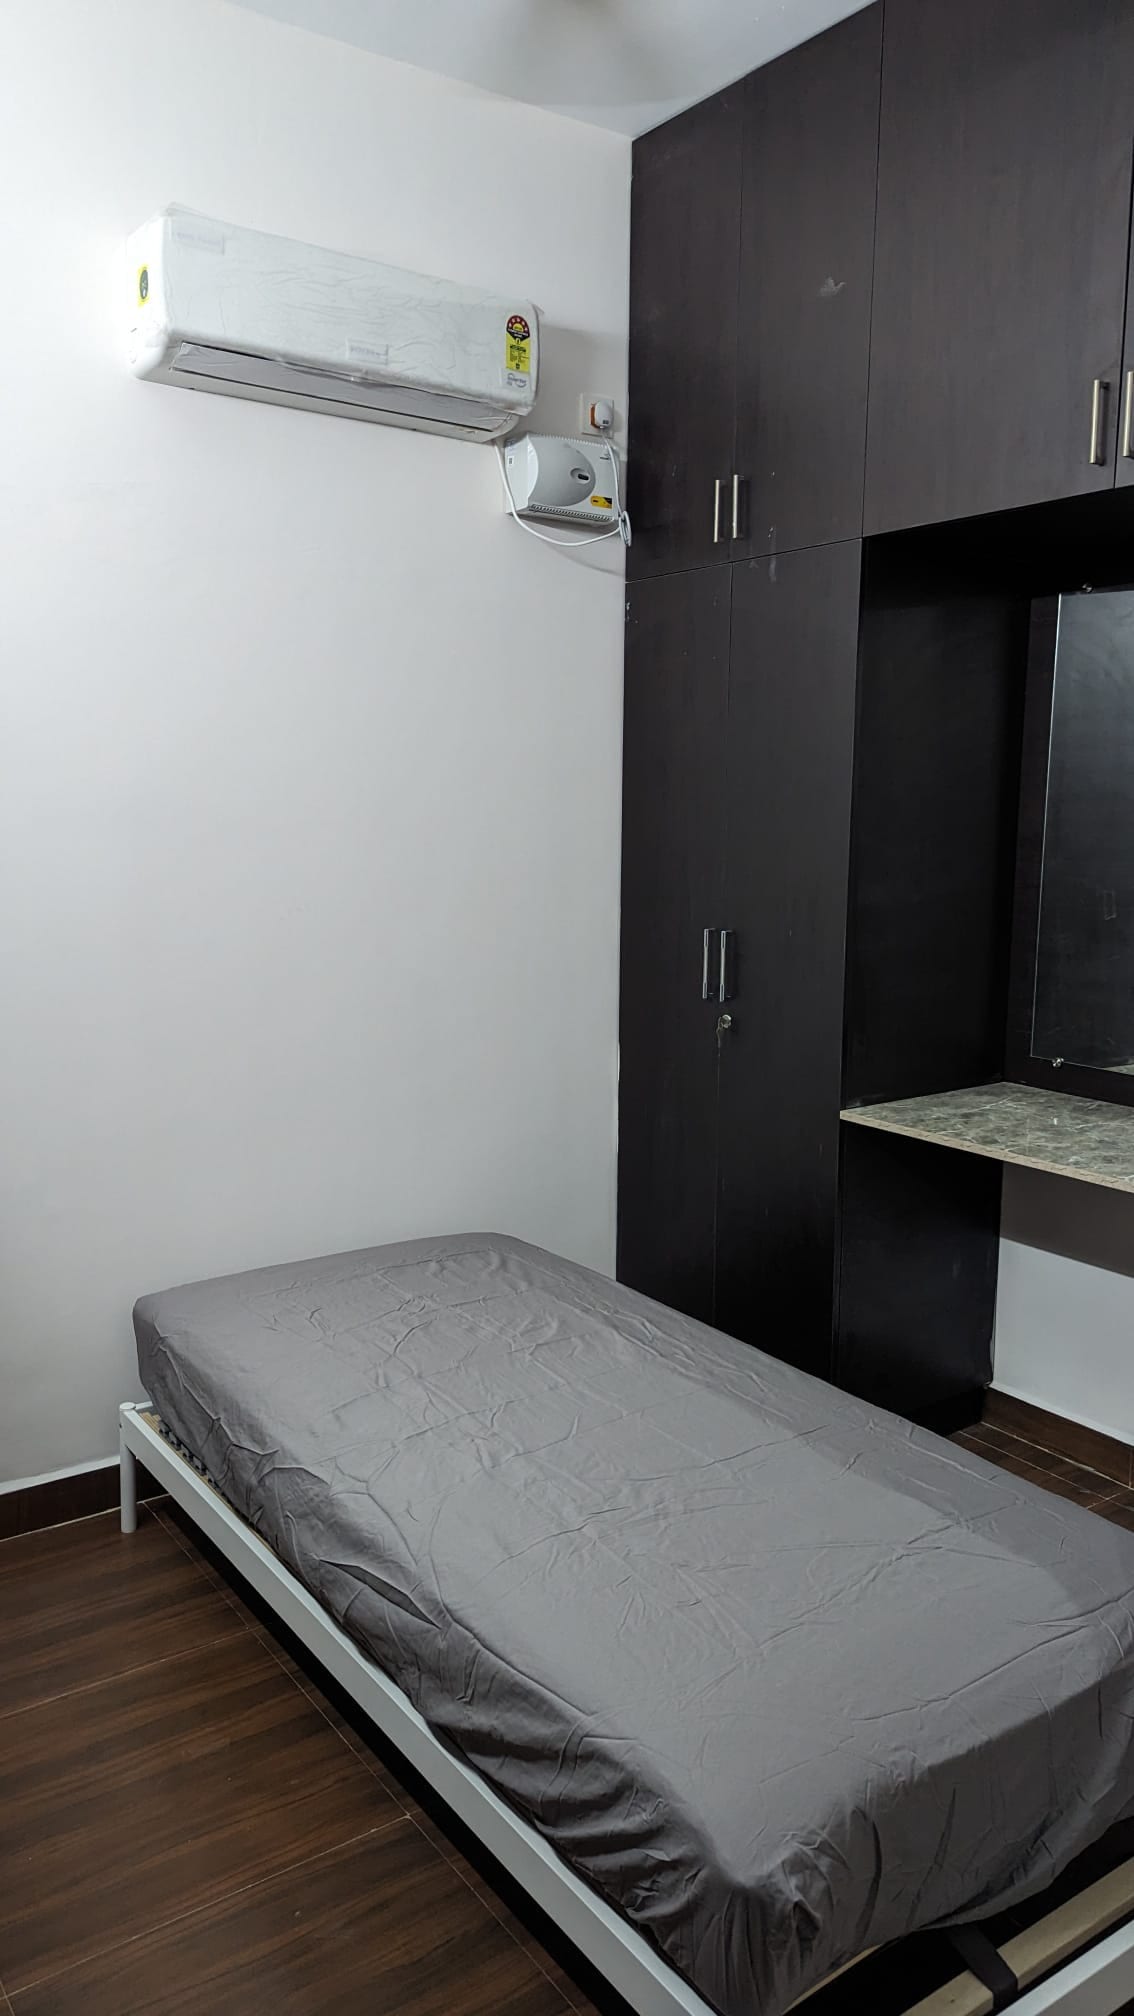 Kalpatharu-102 Duplex Apartment Up to 10 guests